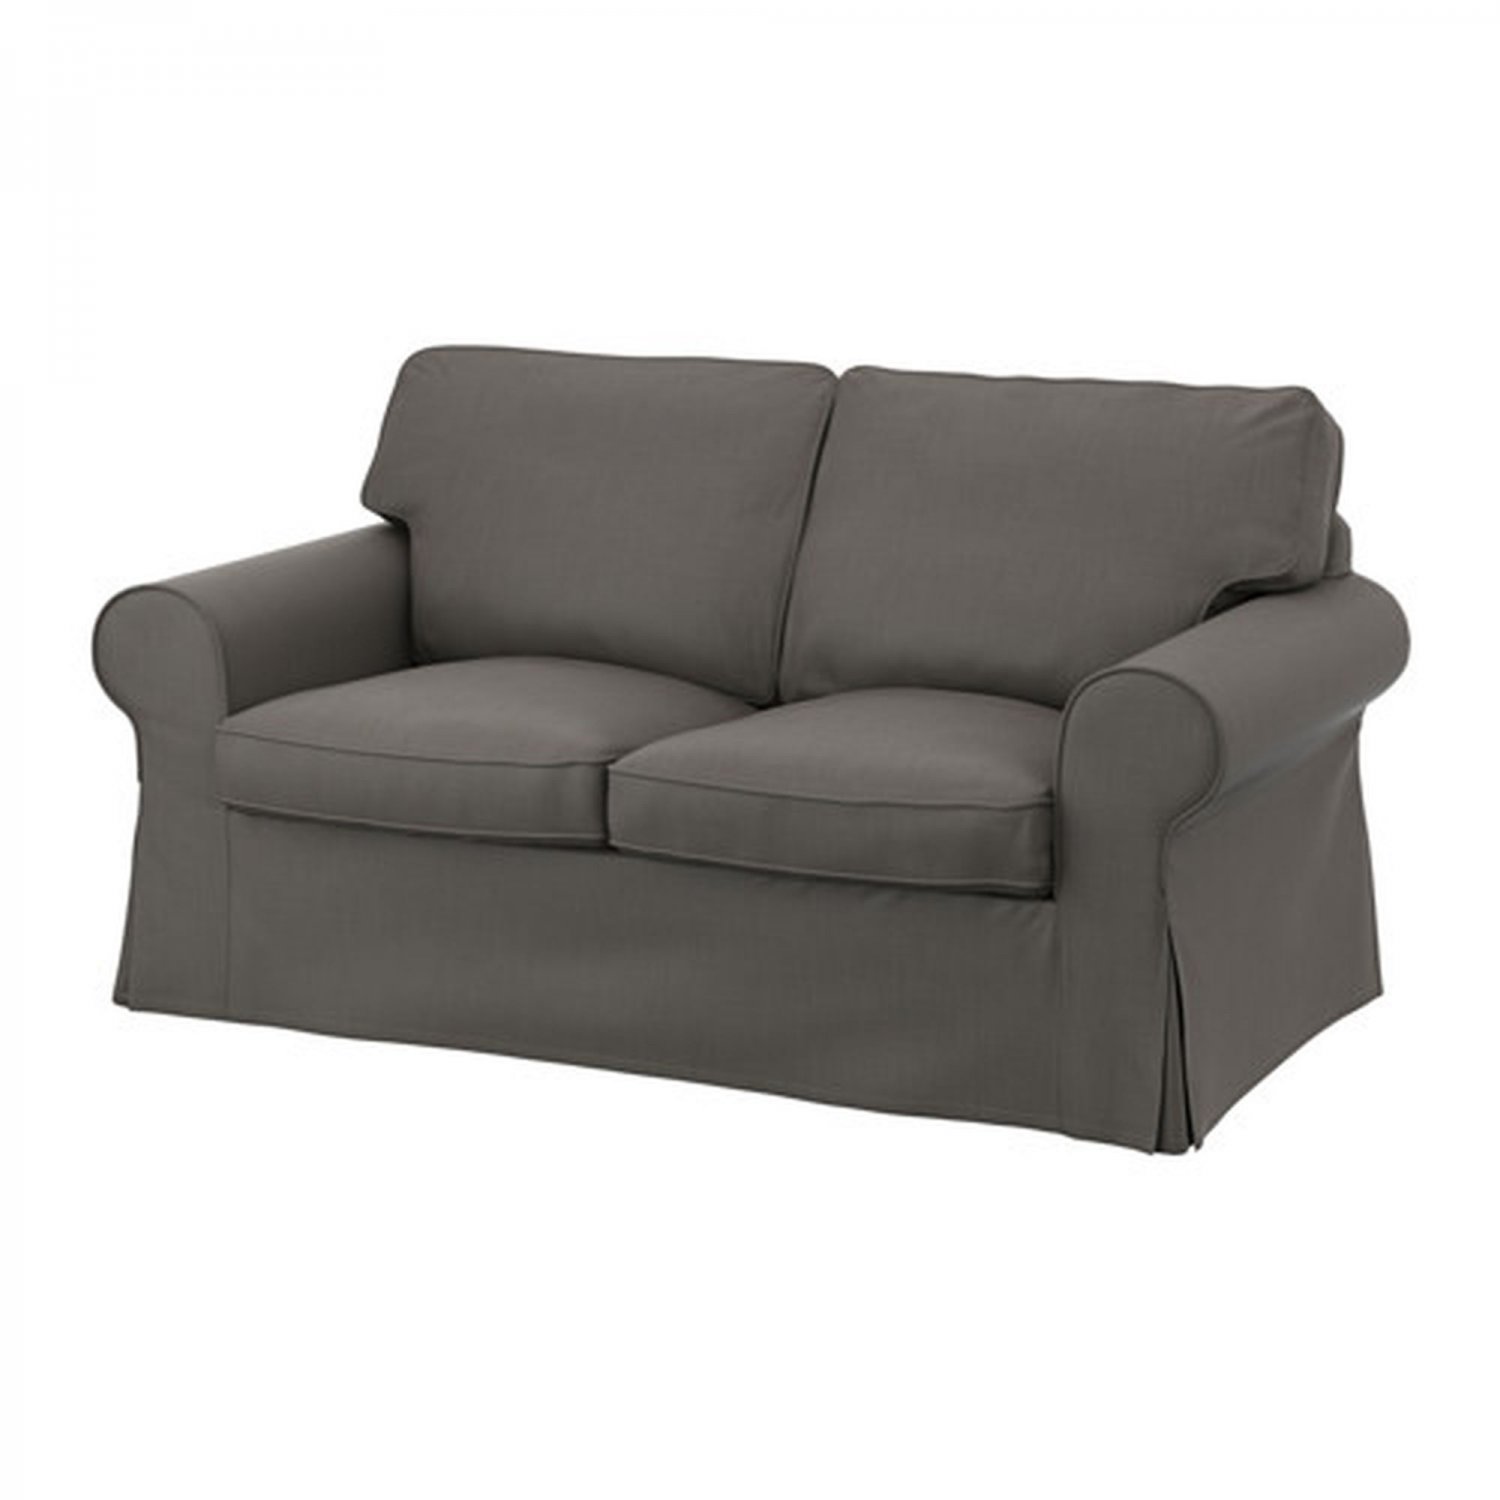 IKEA Ektorp 2 Seat Sofa COVER Loveseat Slipcover NORDVALLA GRAY Grey